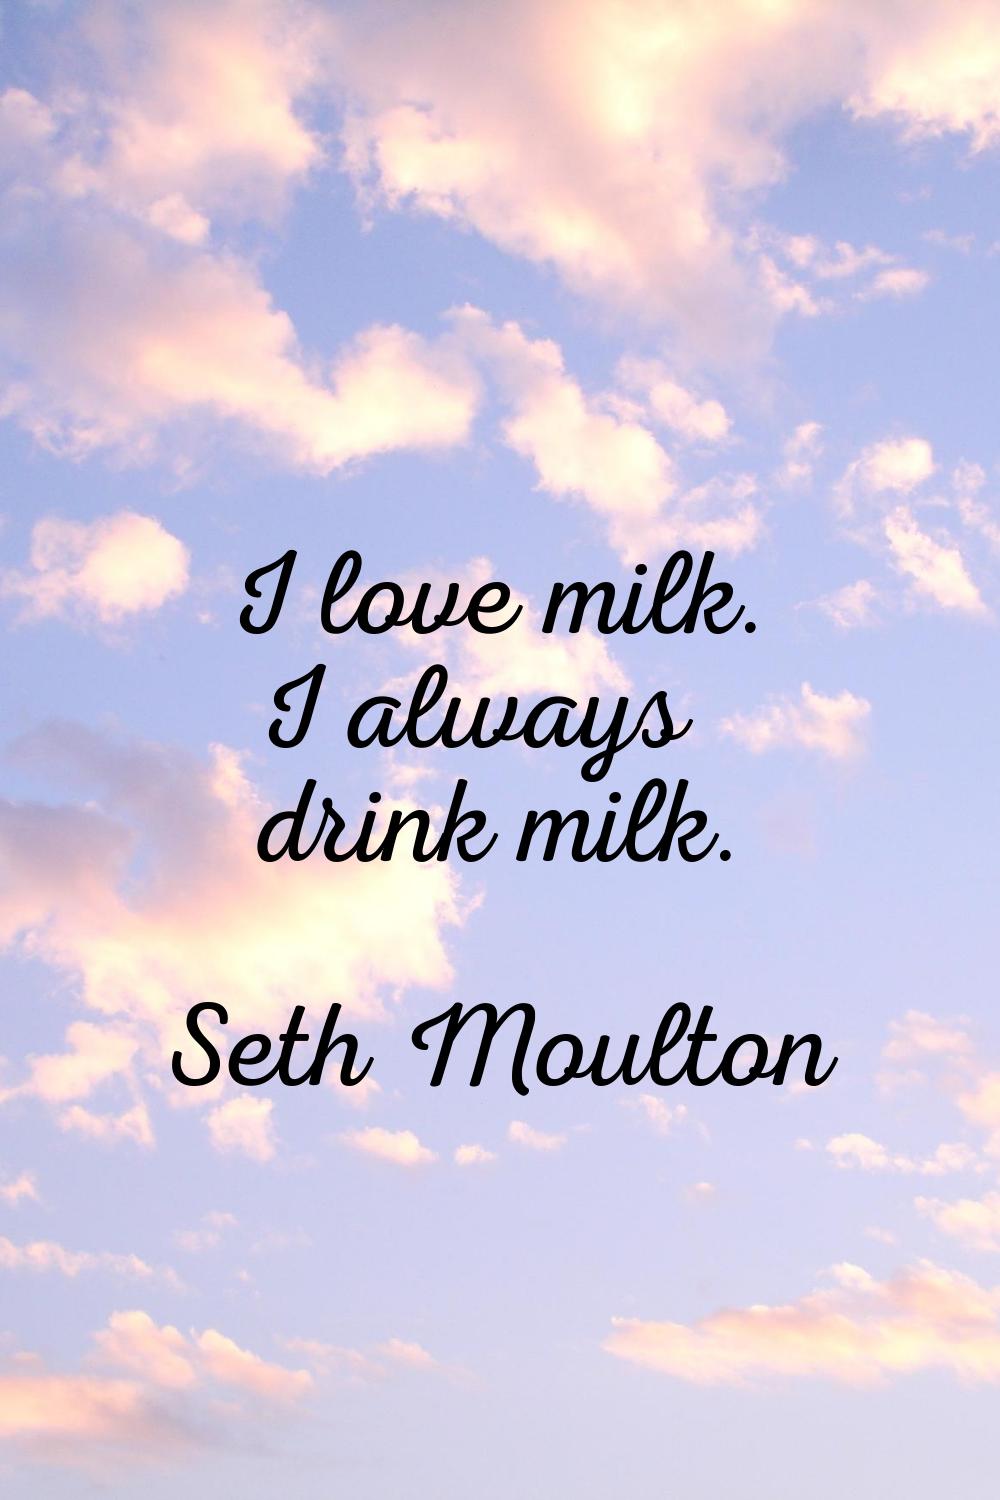 I love milk. I always drink milk.